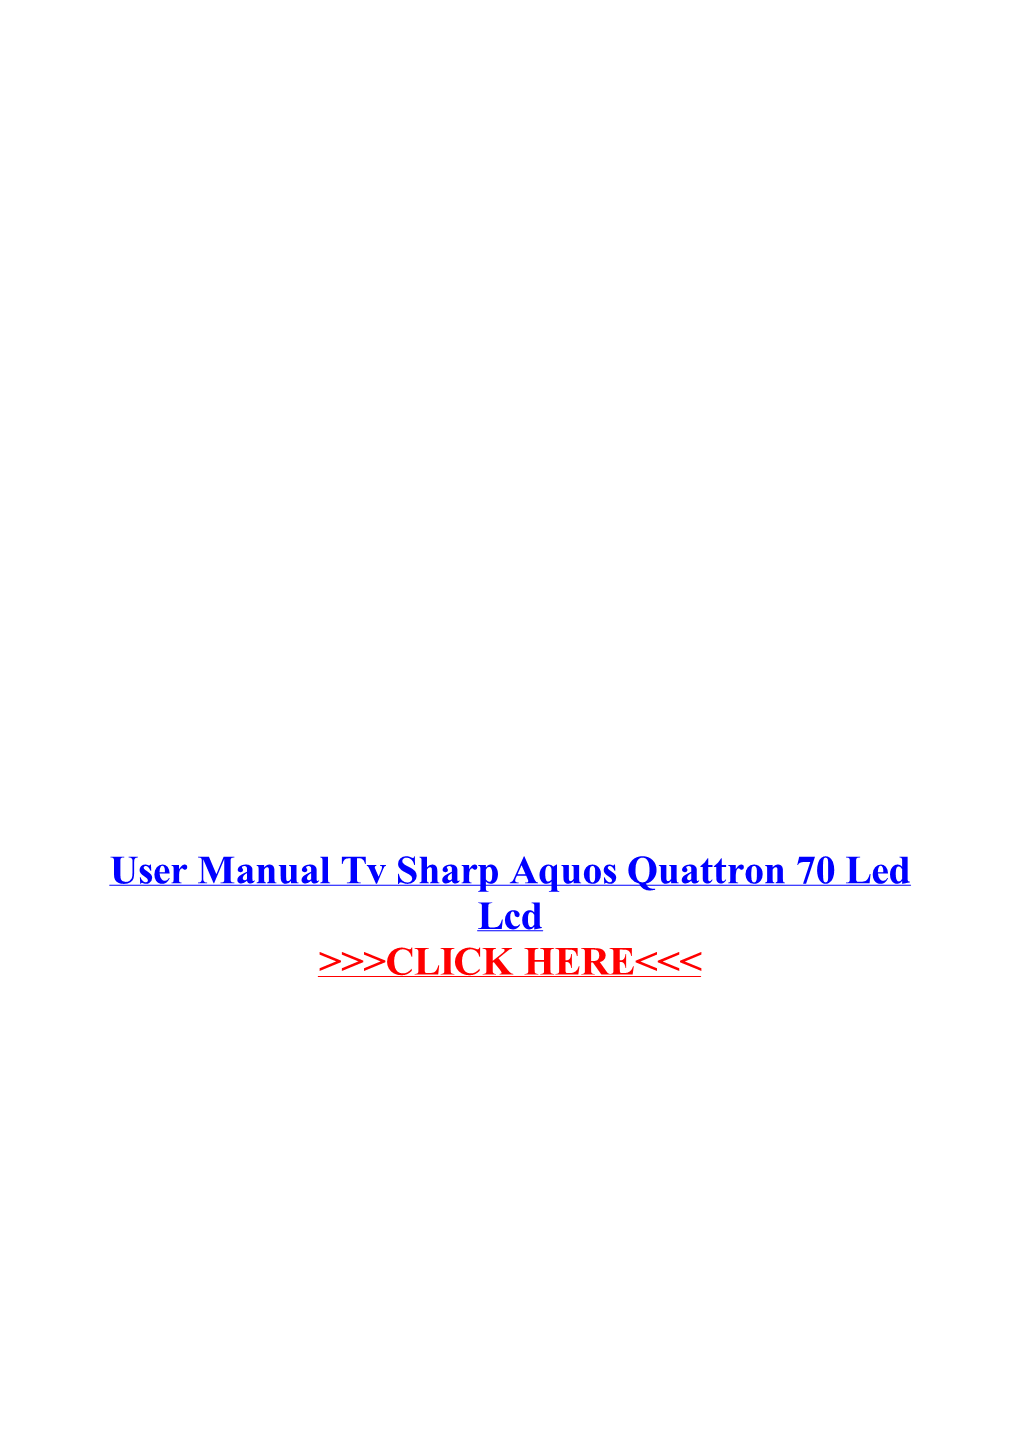 User Manual Tv Sharp Aquos Quattron 70 Led Lcd